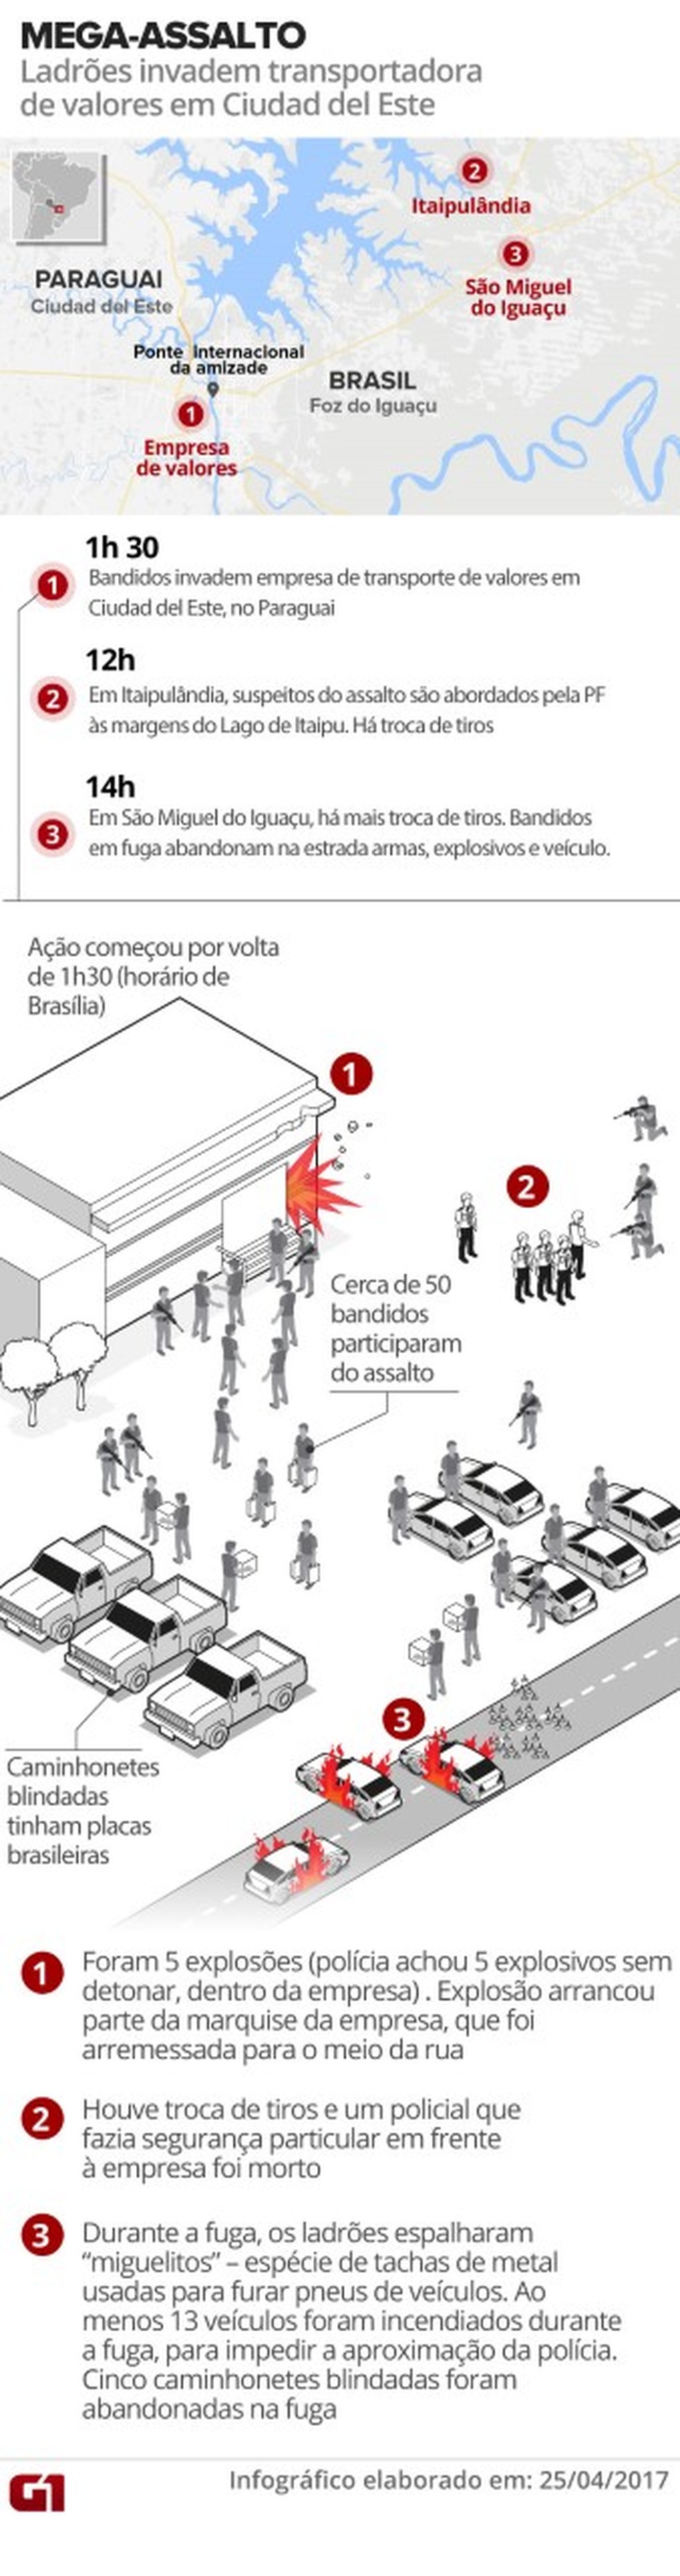 entenda como foi o mega-assalto no Paraguai (Foto: Editoria de Arte/G1)